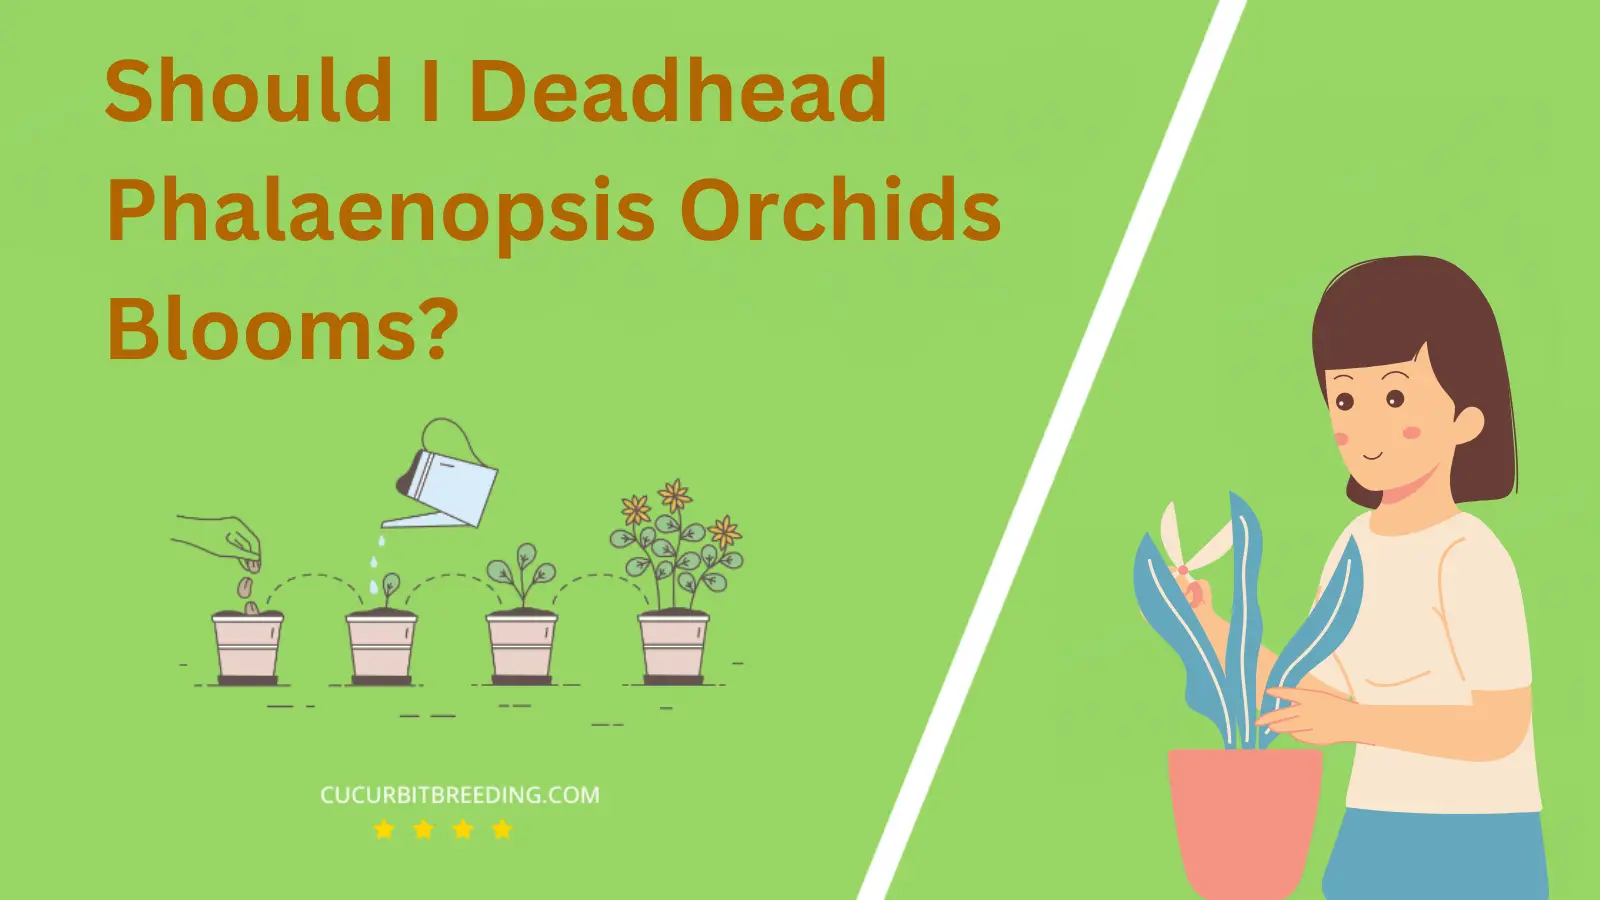 Should I Deadhead Phalaenopsis Orchids Blooms?